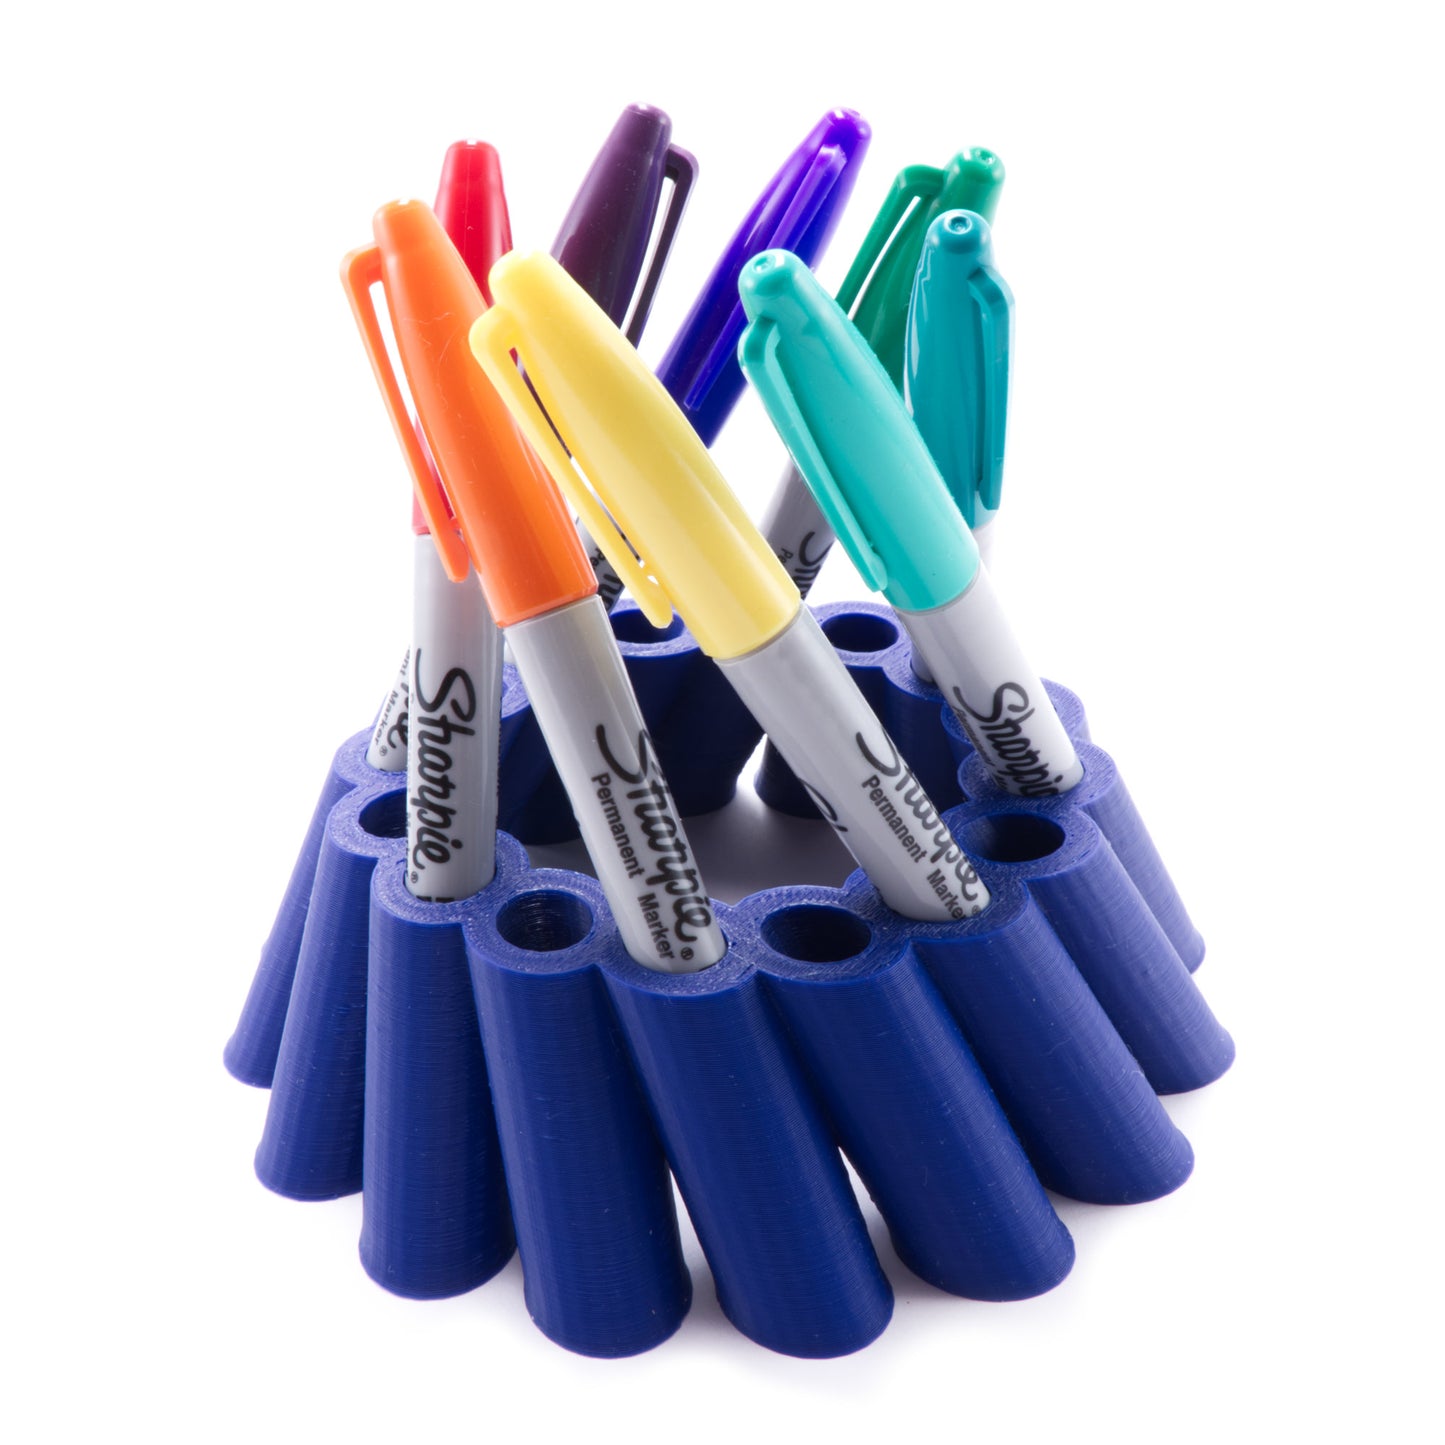 Hyperboloid Pen / Pencil / Marker Holder Stand - NEW SIZES!